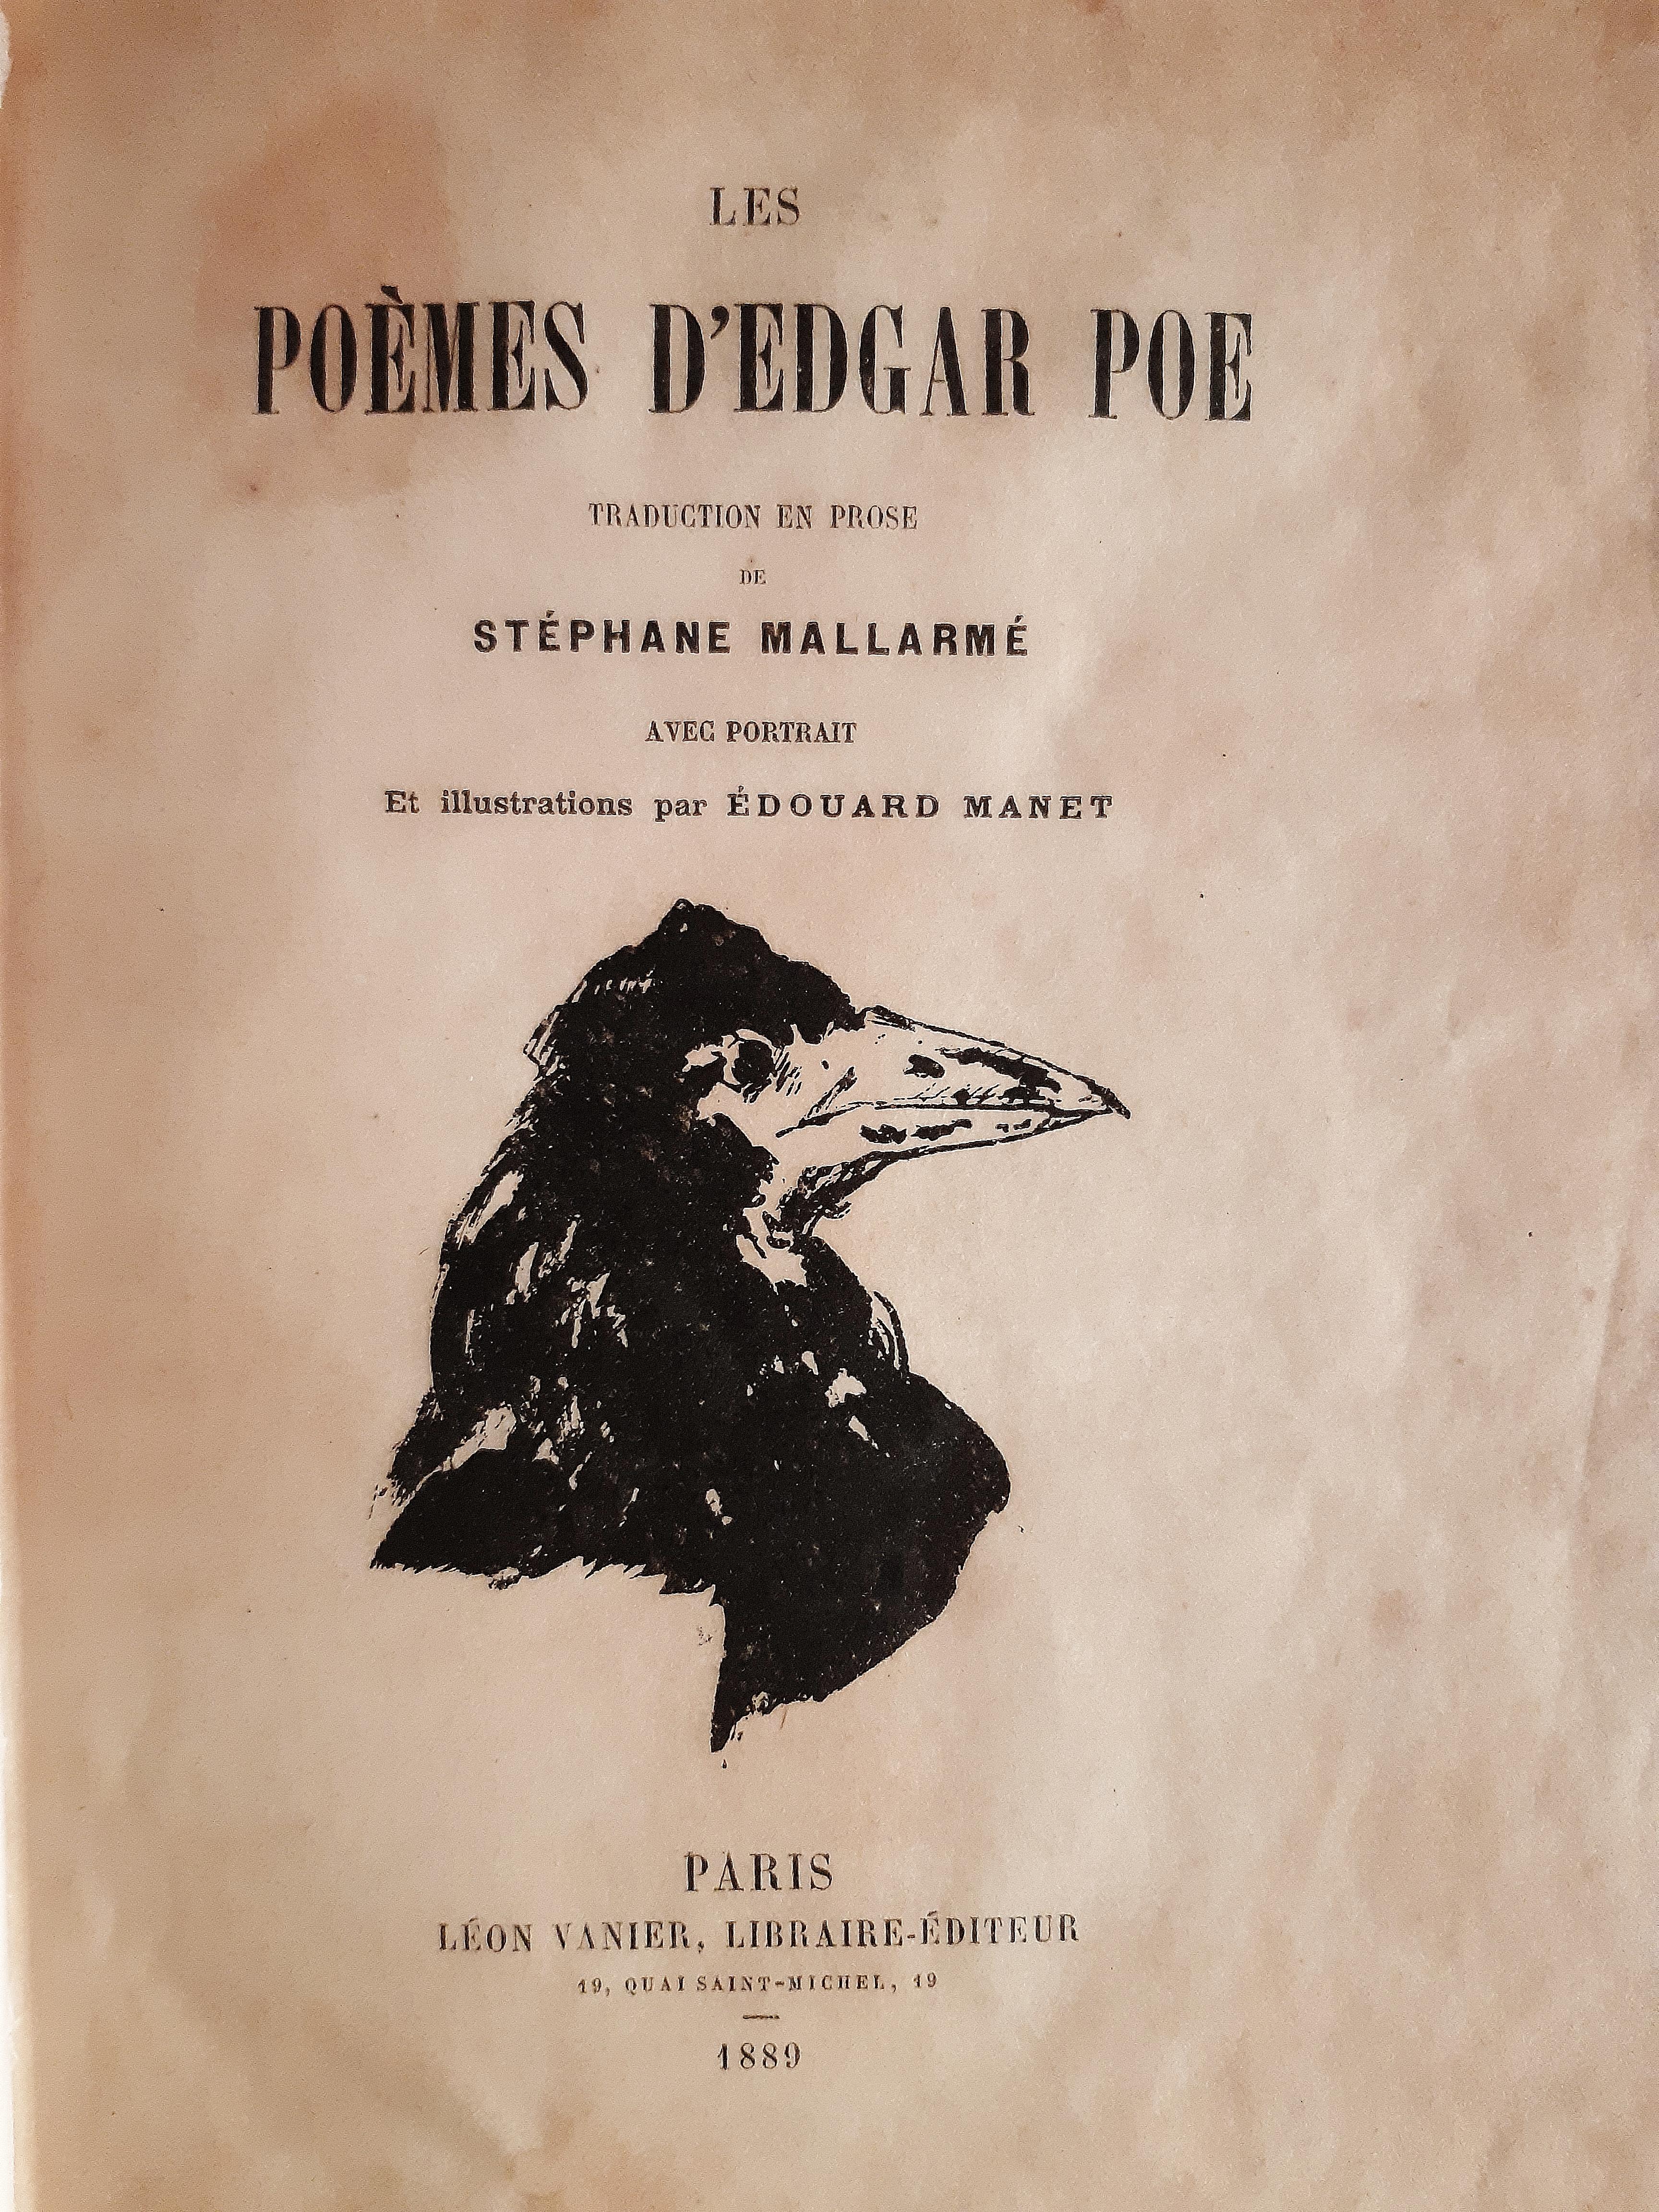 Les Poèmes - Original Rare Book Illustrated after Edouard Manet - 1889